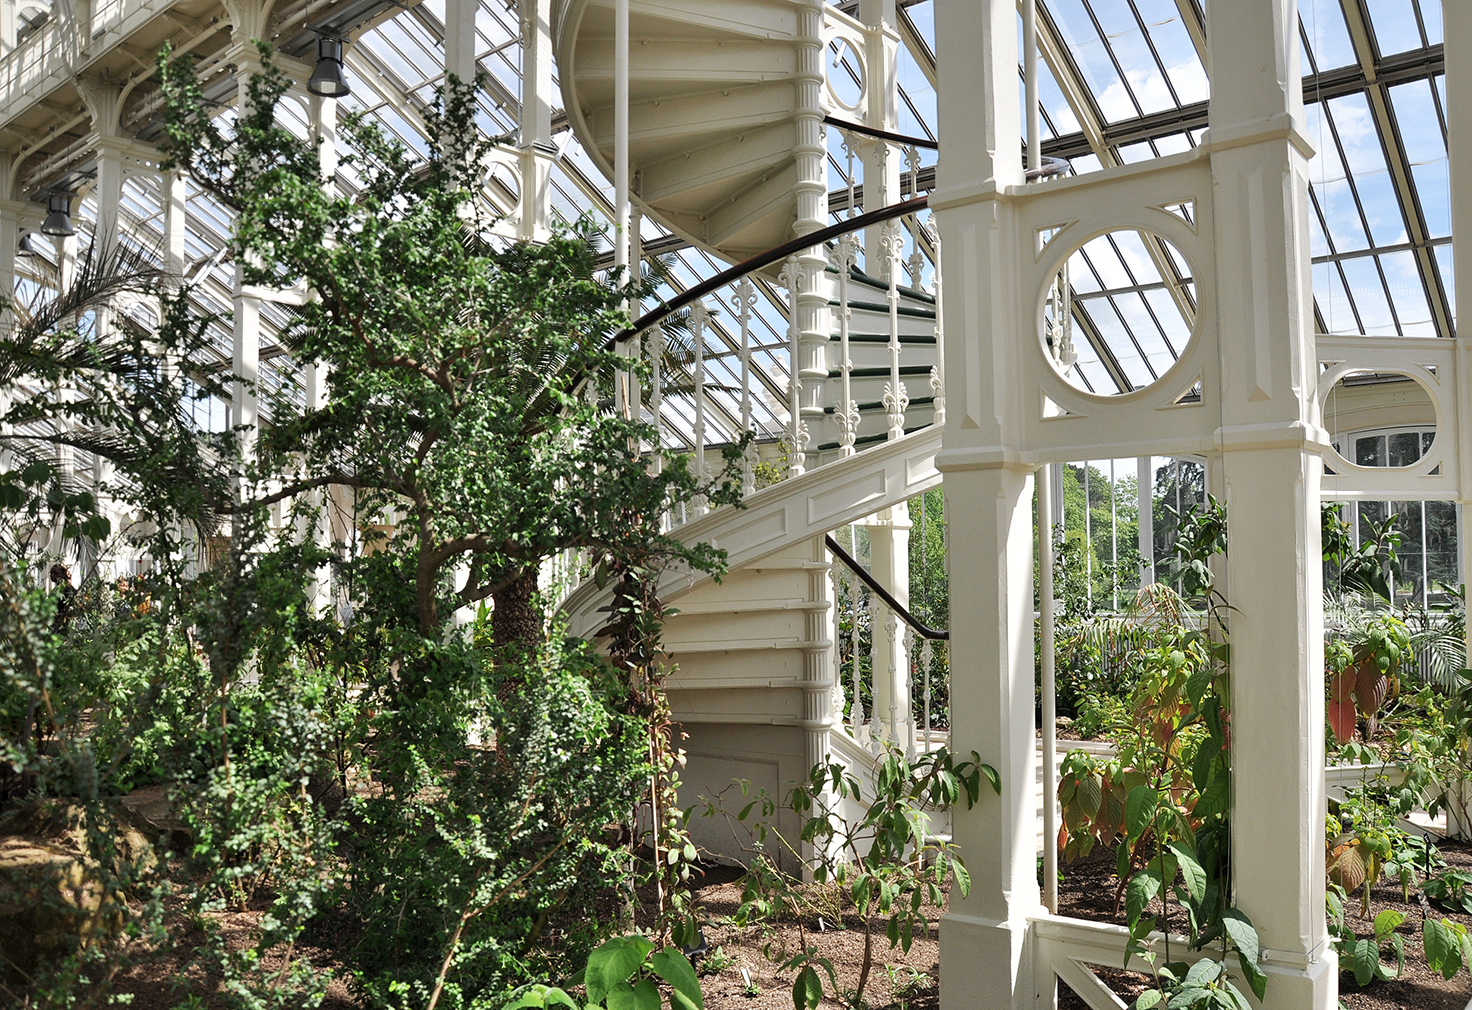 Explore Kew Gardens' freshly restored Temperate House